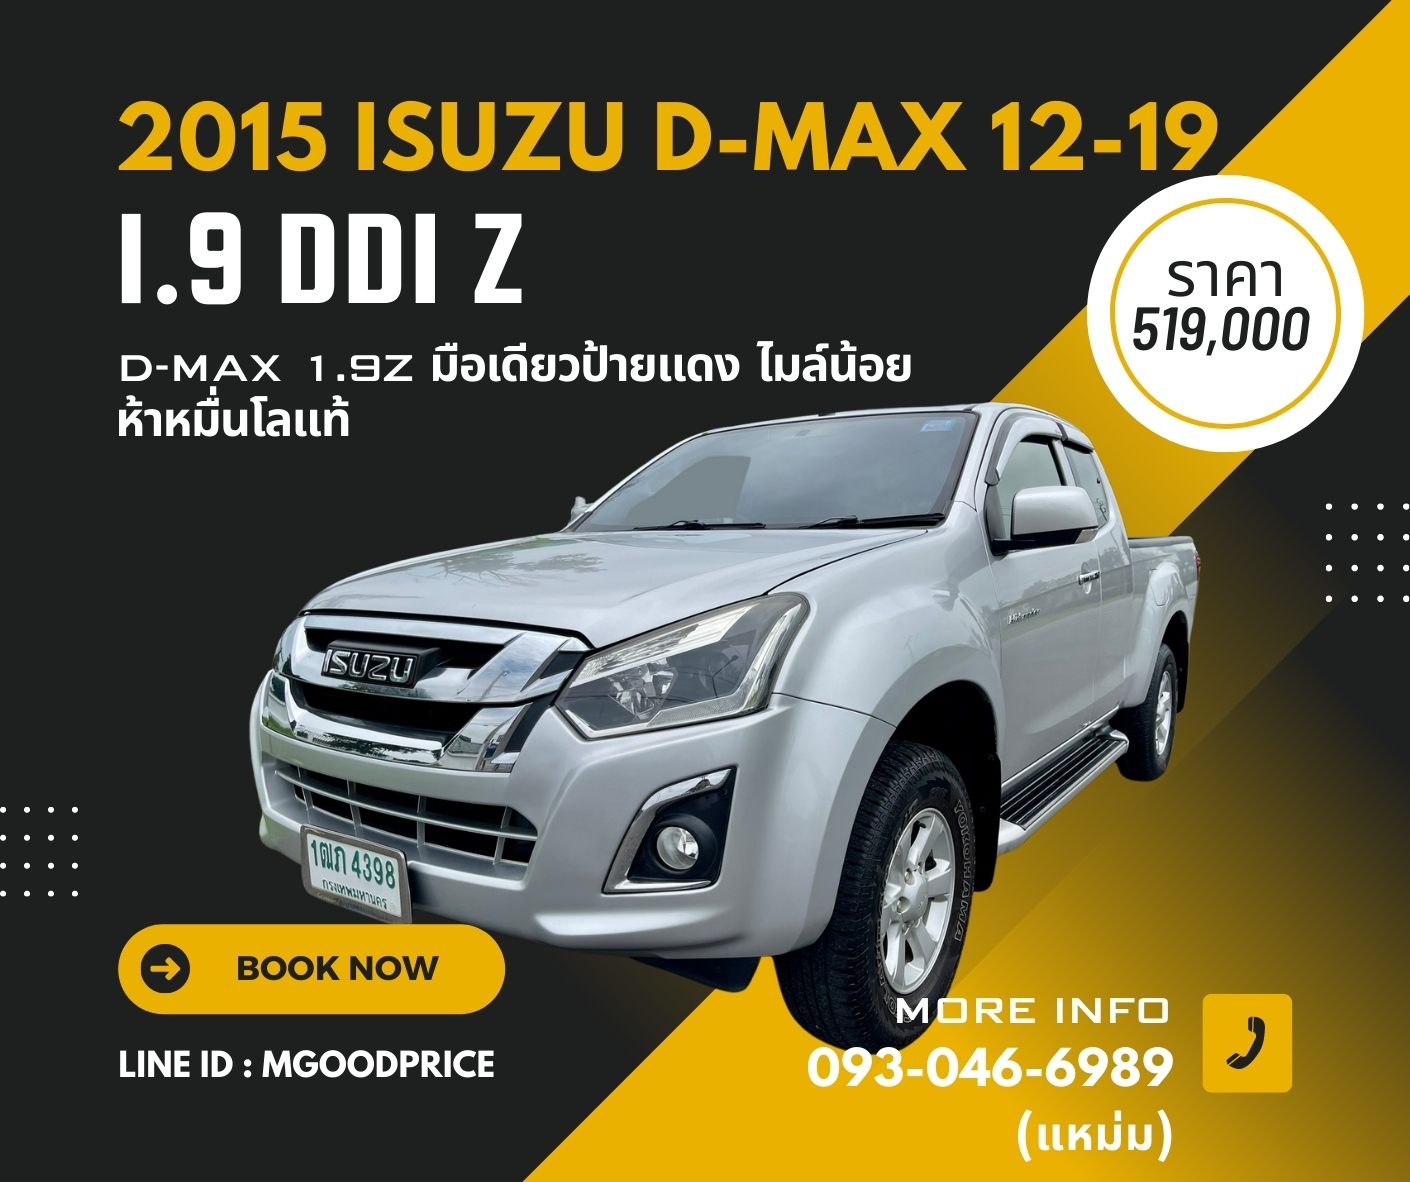 2015 ISUZU D-MAX 12-19, 1.9 Ddi Z โฉม HI-LANDER SPACECAB 1